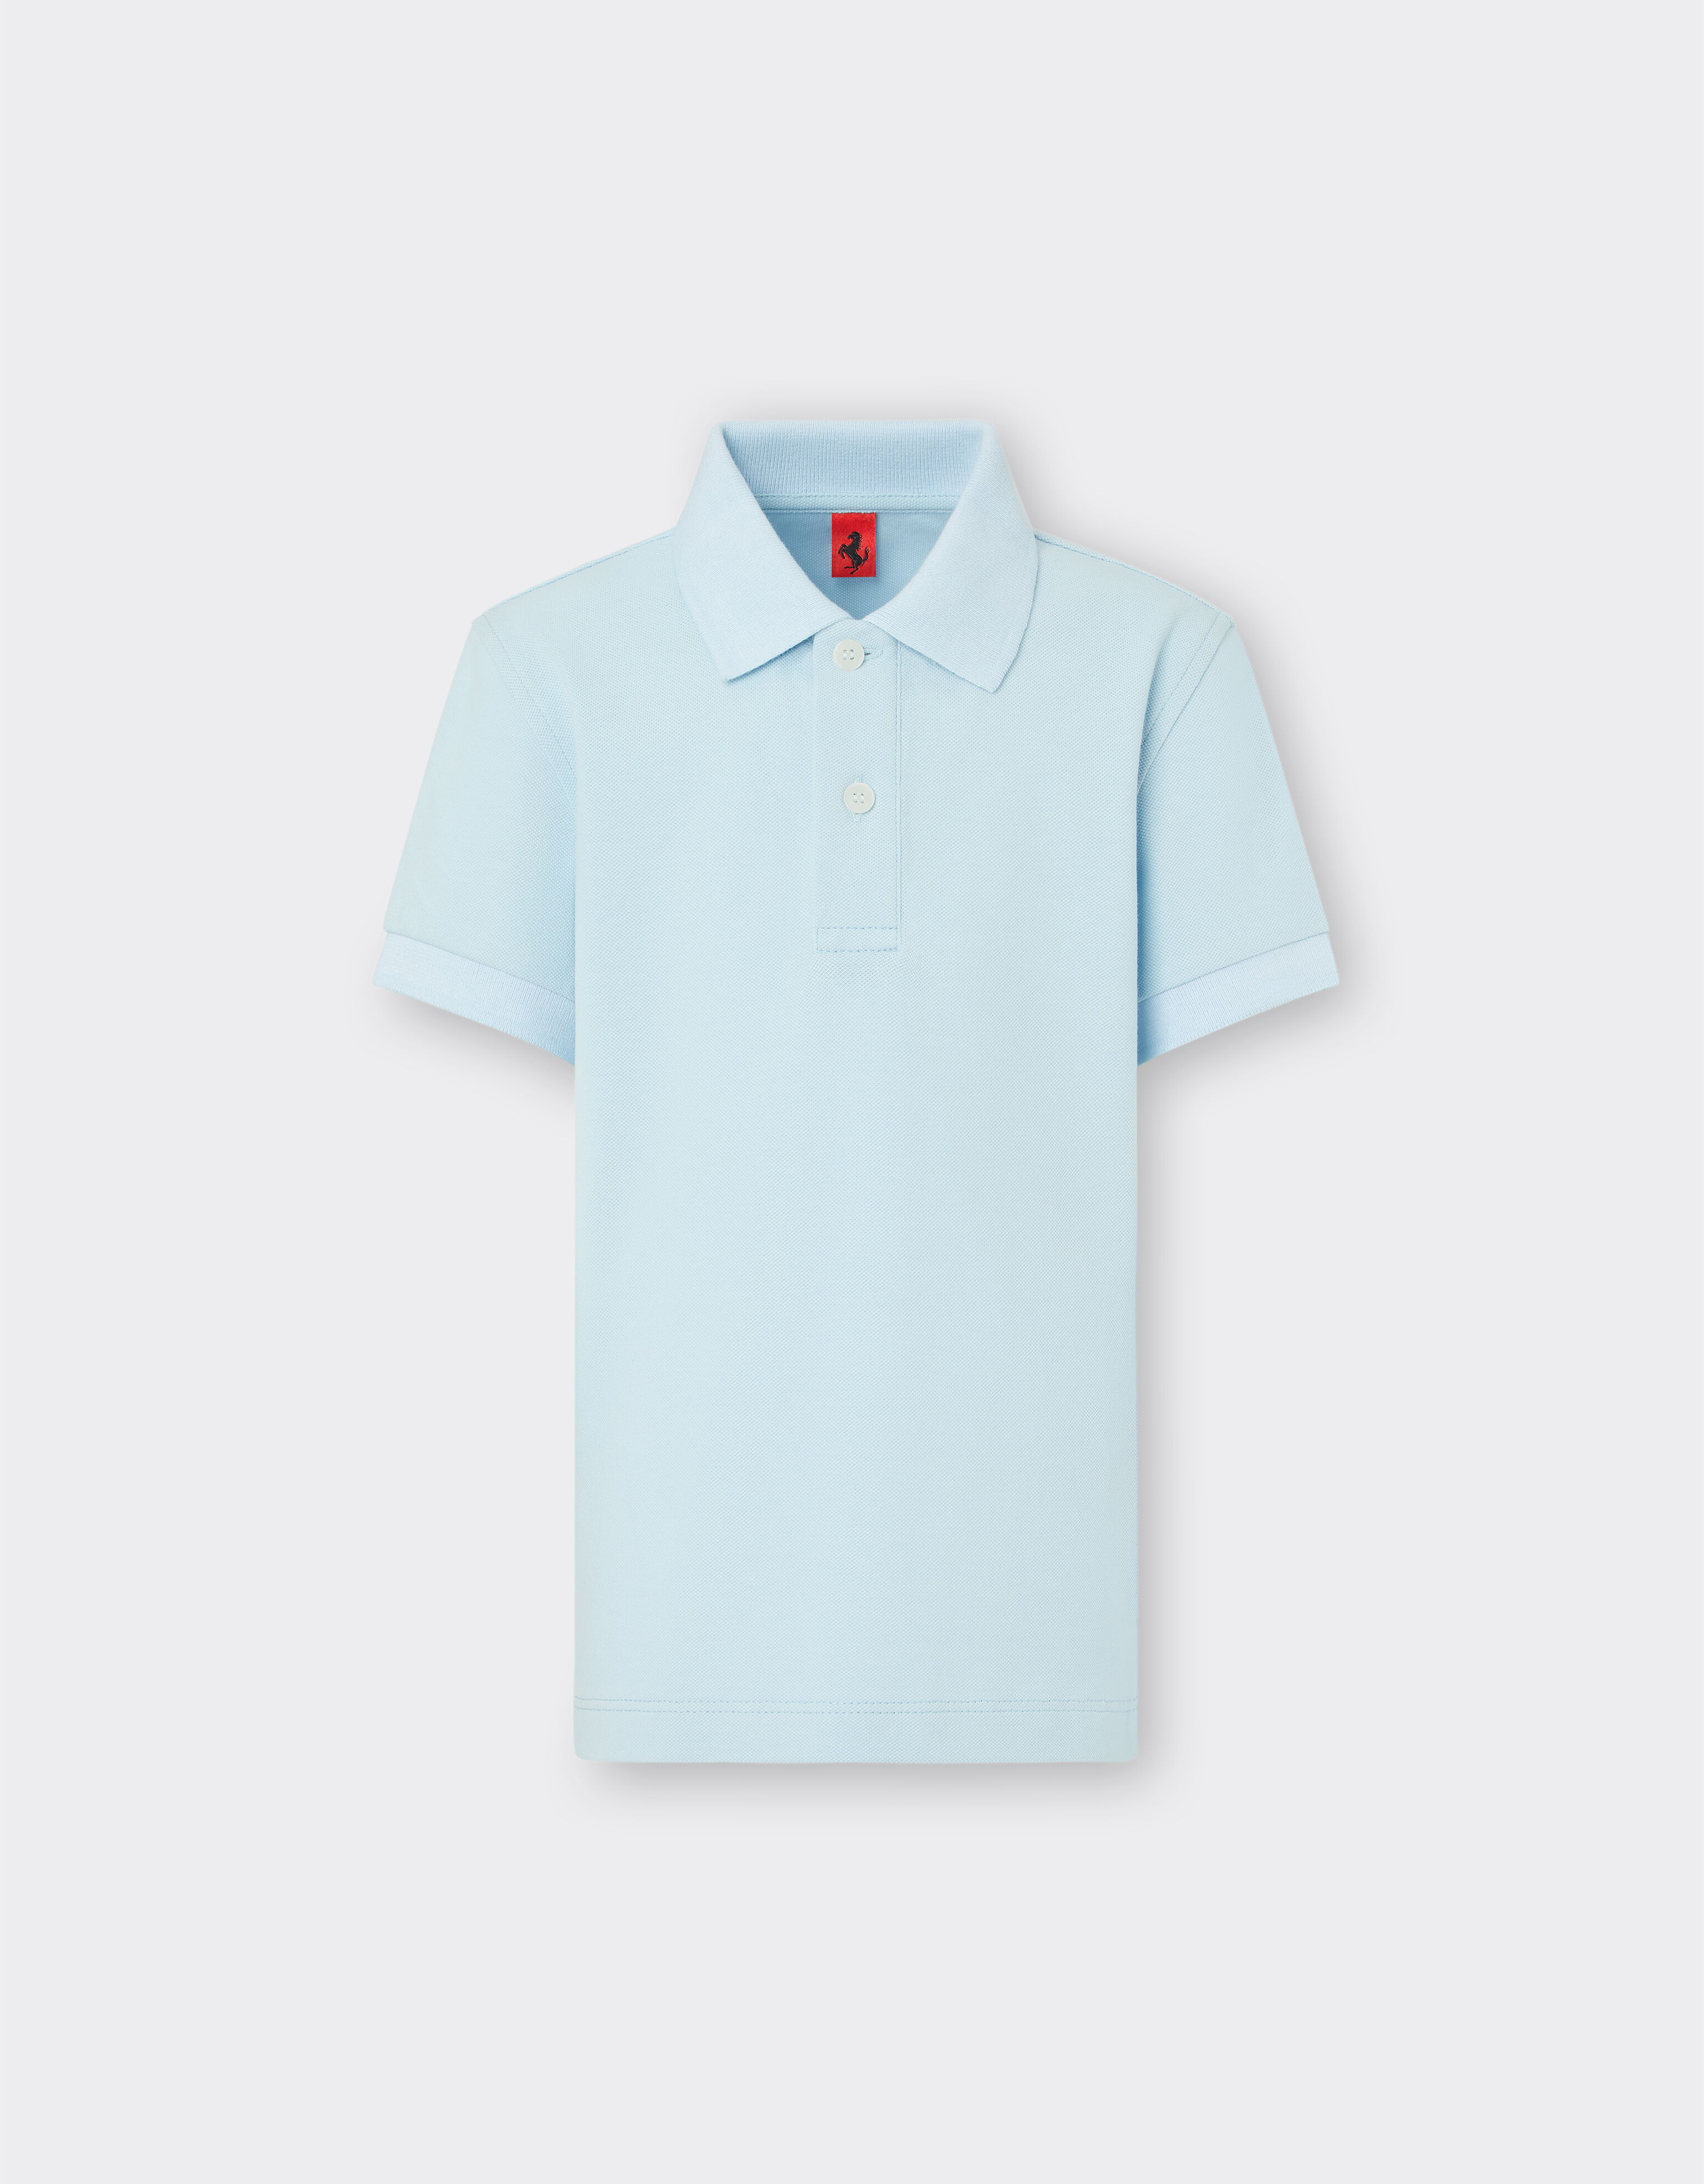 Ferrari Children’s polo shirt in organic cotton piqué Rosso Corsa 20160fK